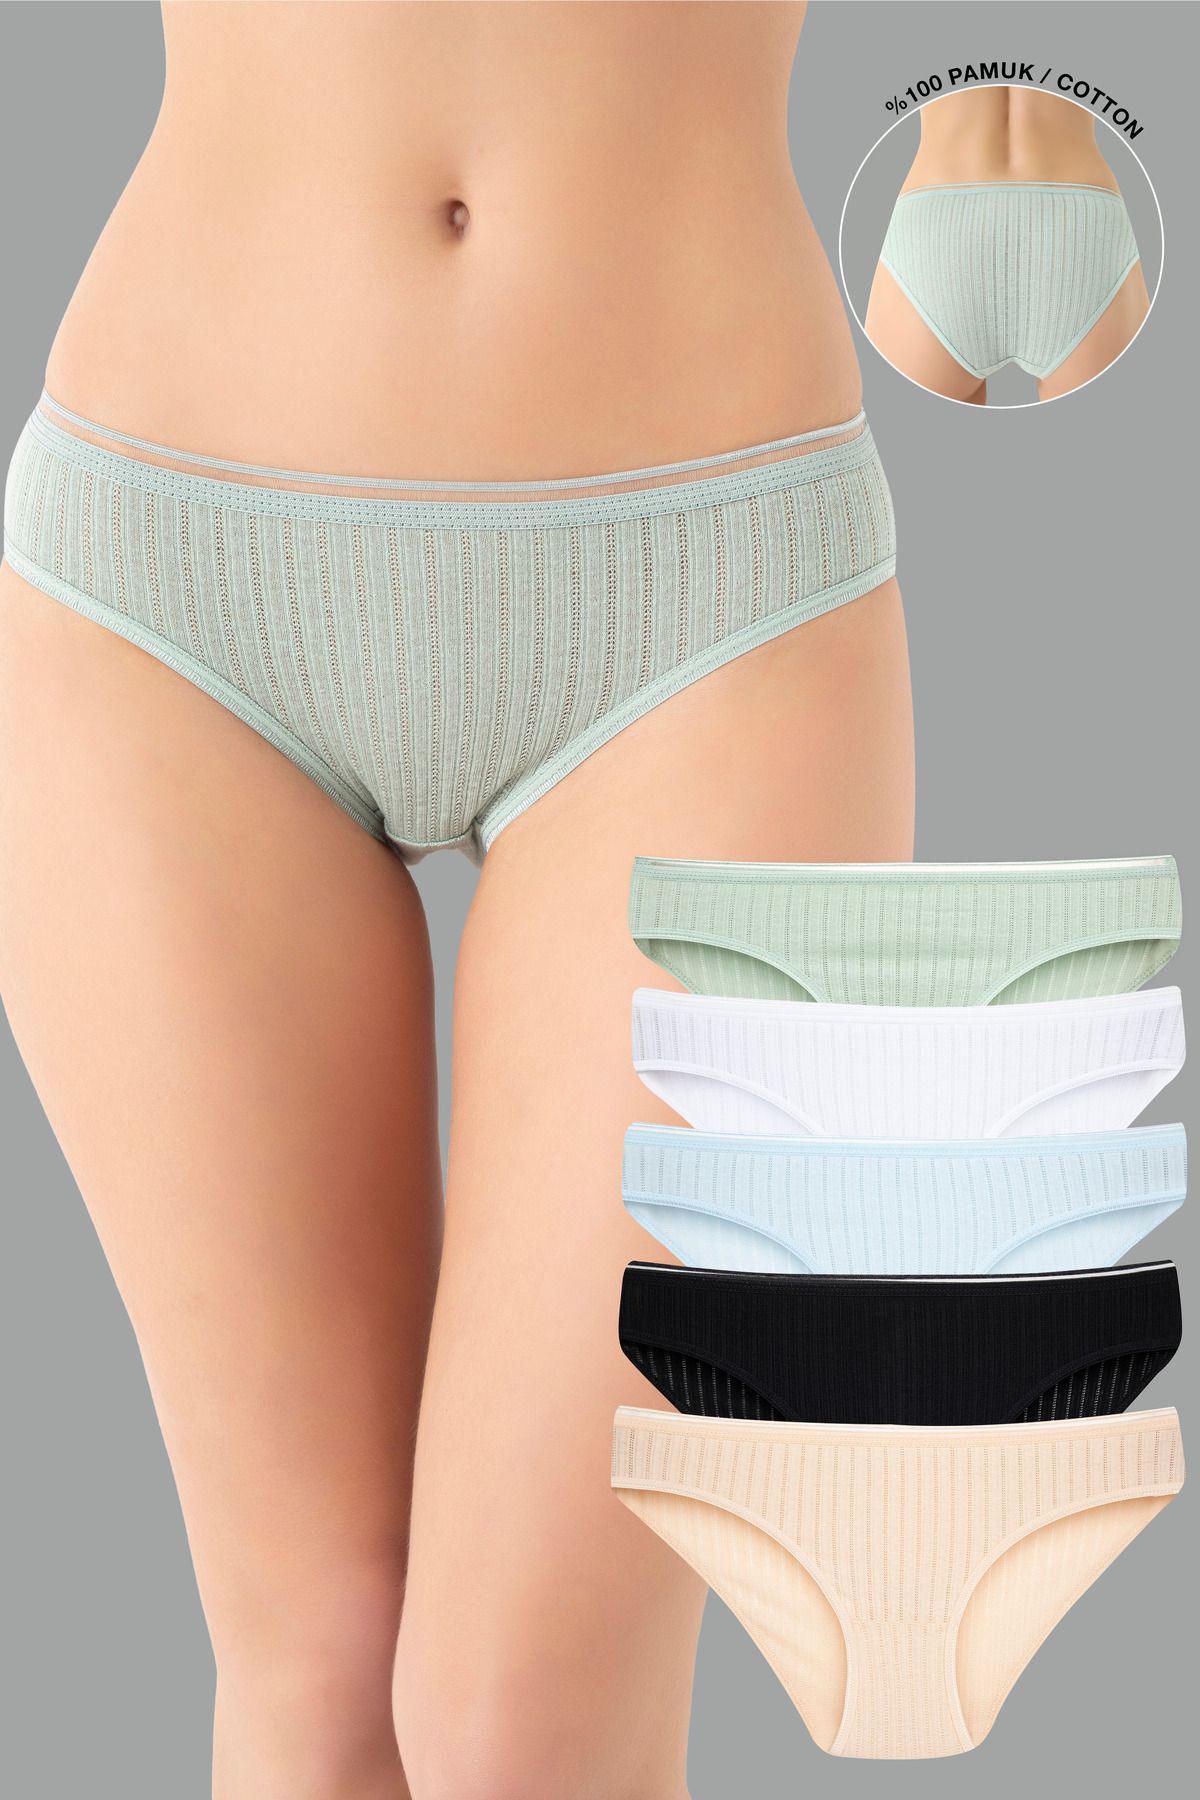 Ramior 5'Lİ Paket Zincir Dikişli Nefes Alan Kumaş % 100 Pamuk Bikini Külot(siyah,yeşil,mavi,beyaz,ten)